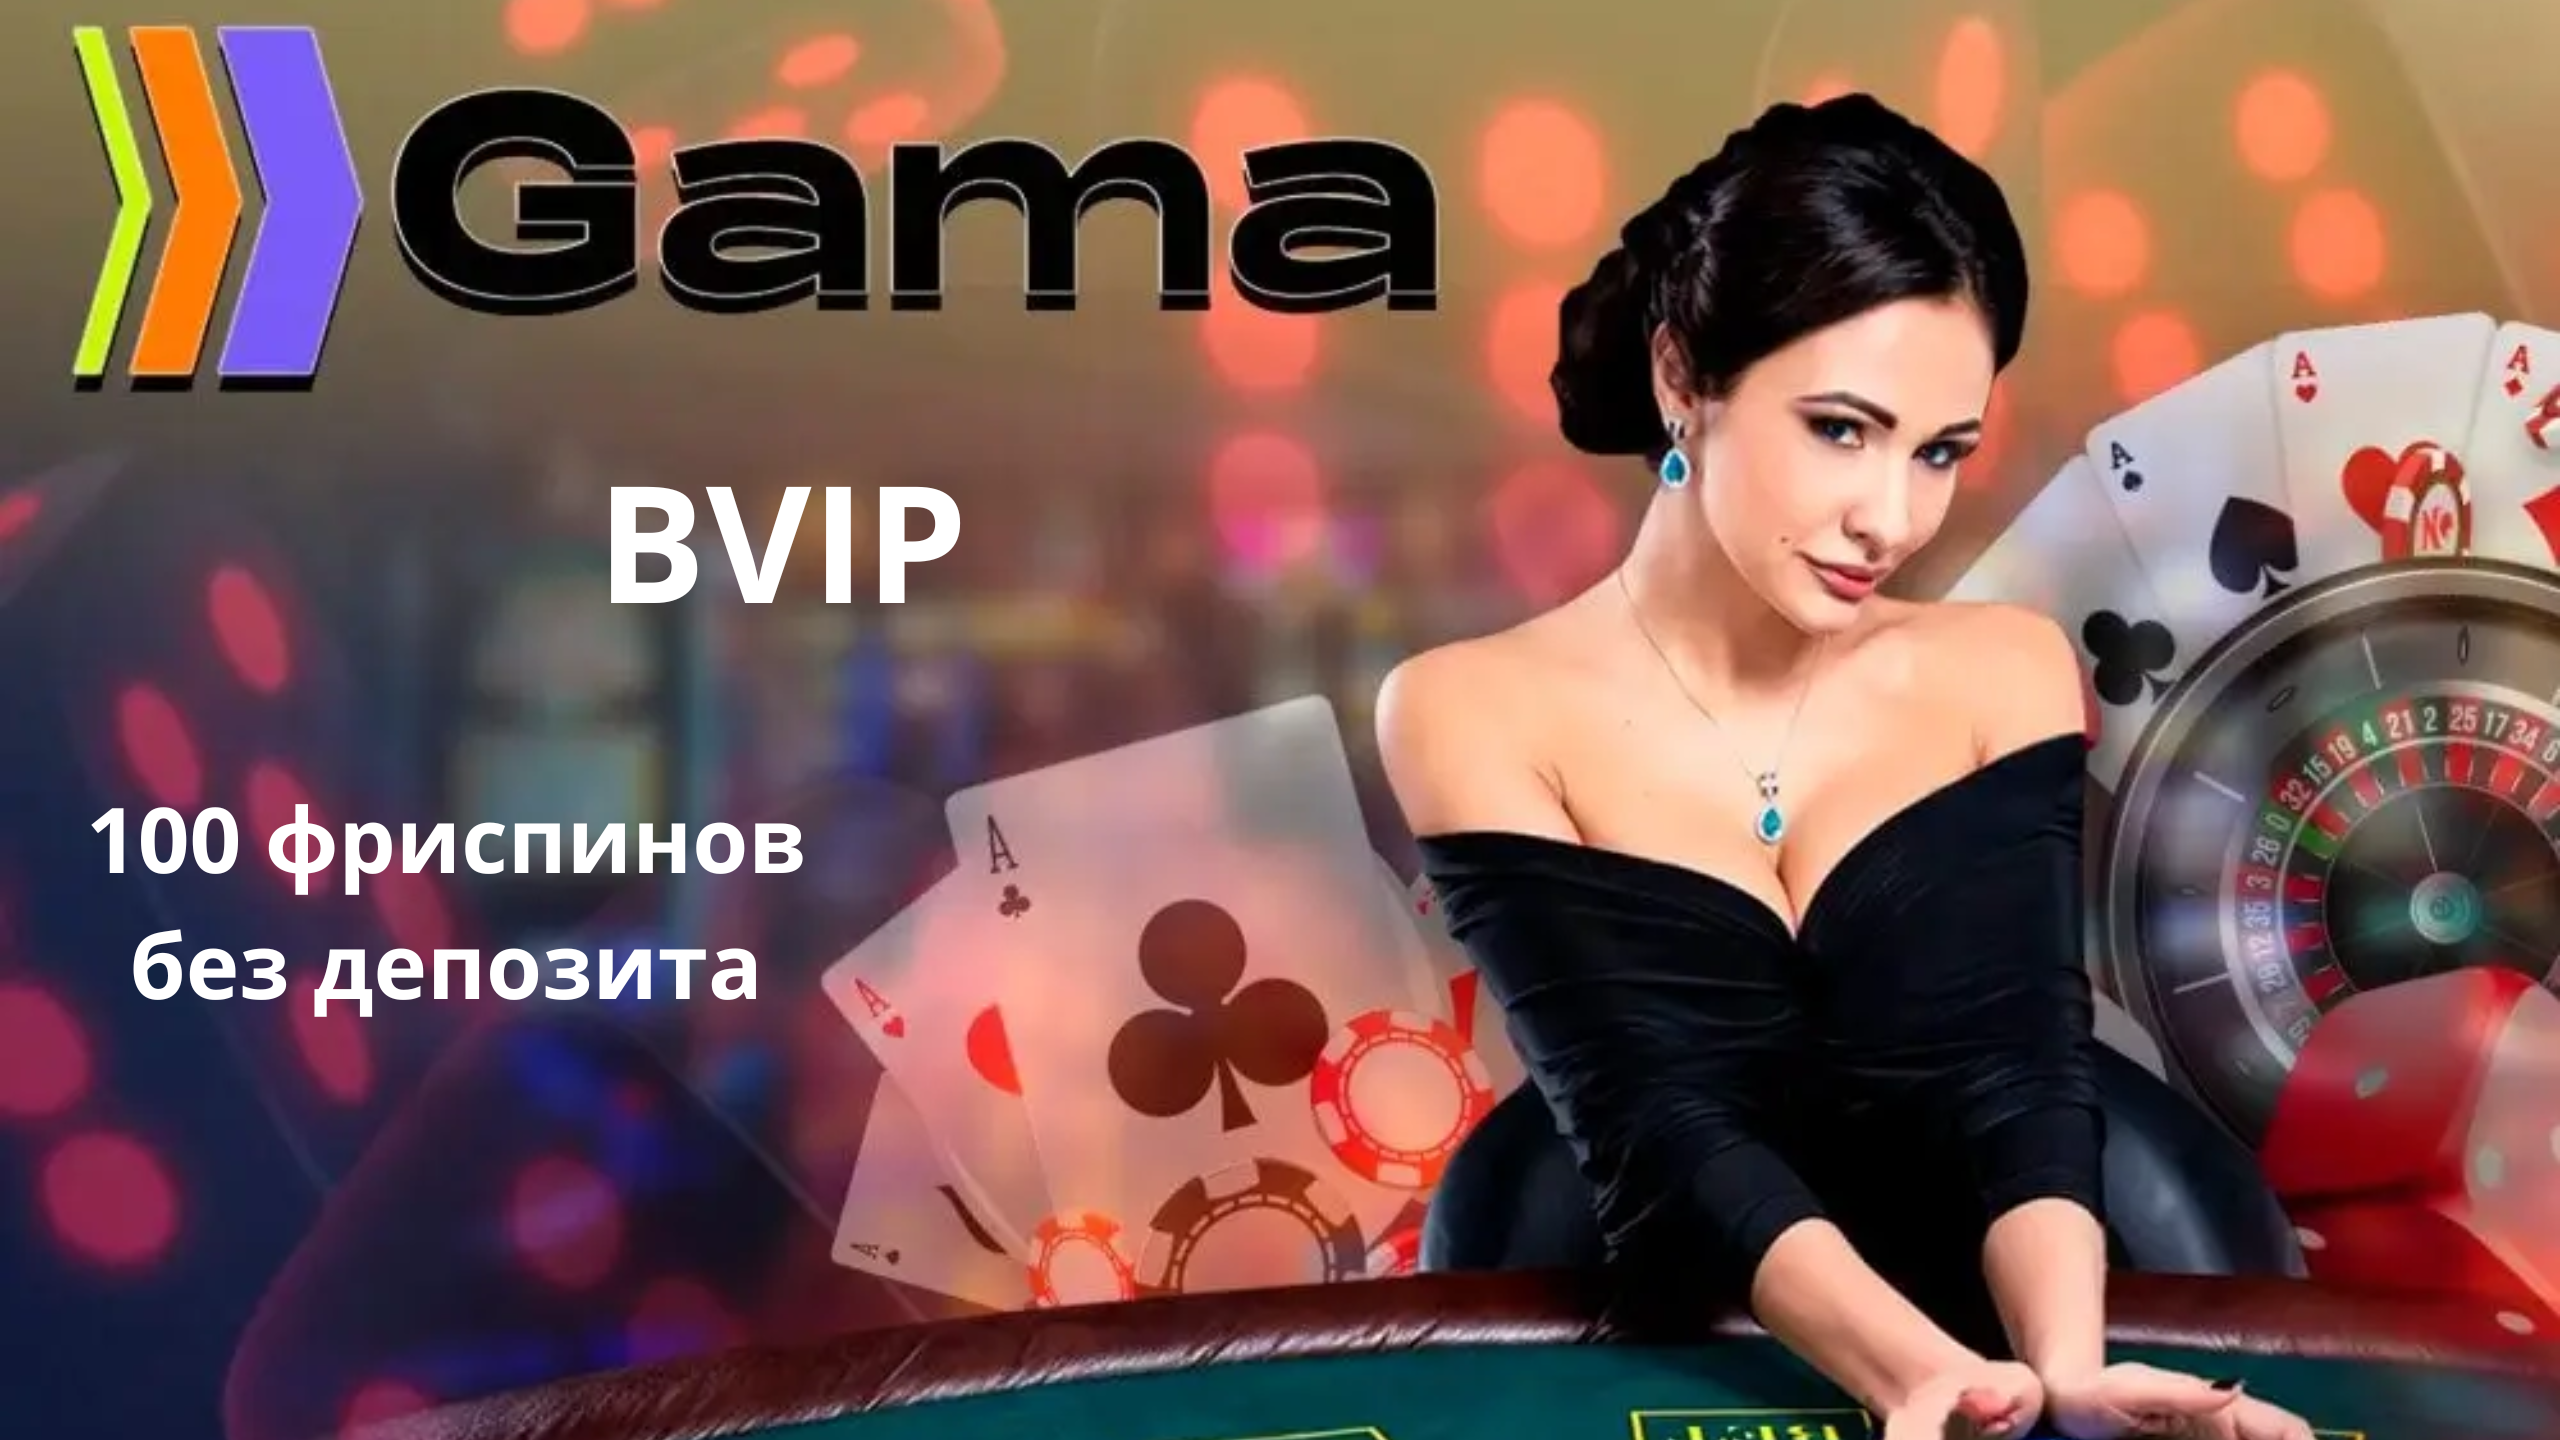 Gama casino gamma casino site org ru. Бонус Луны в казино.